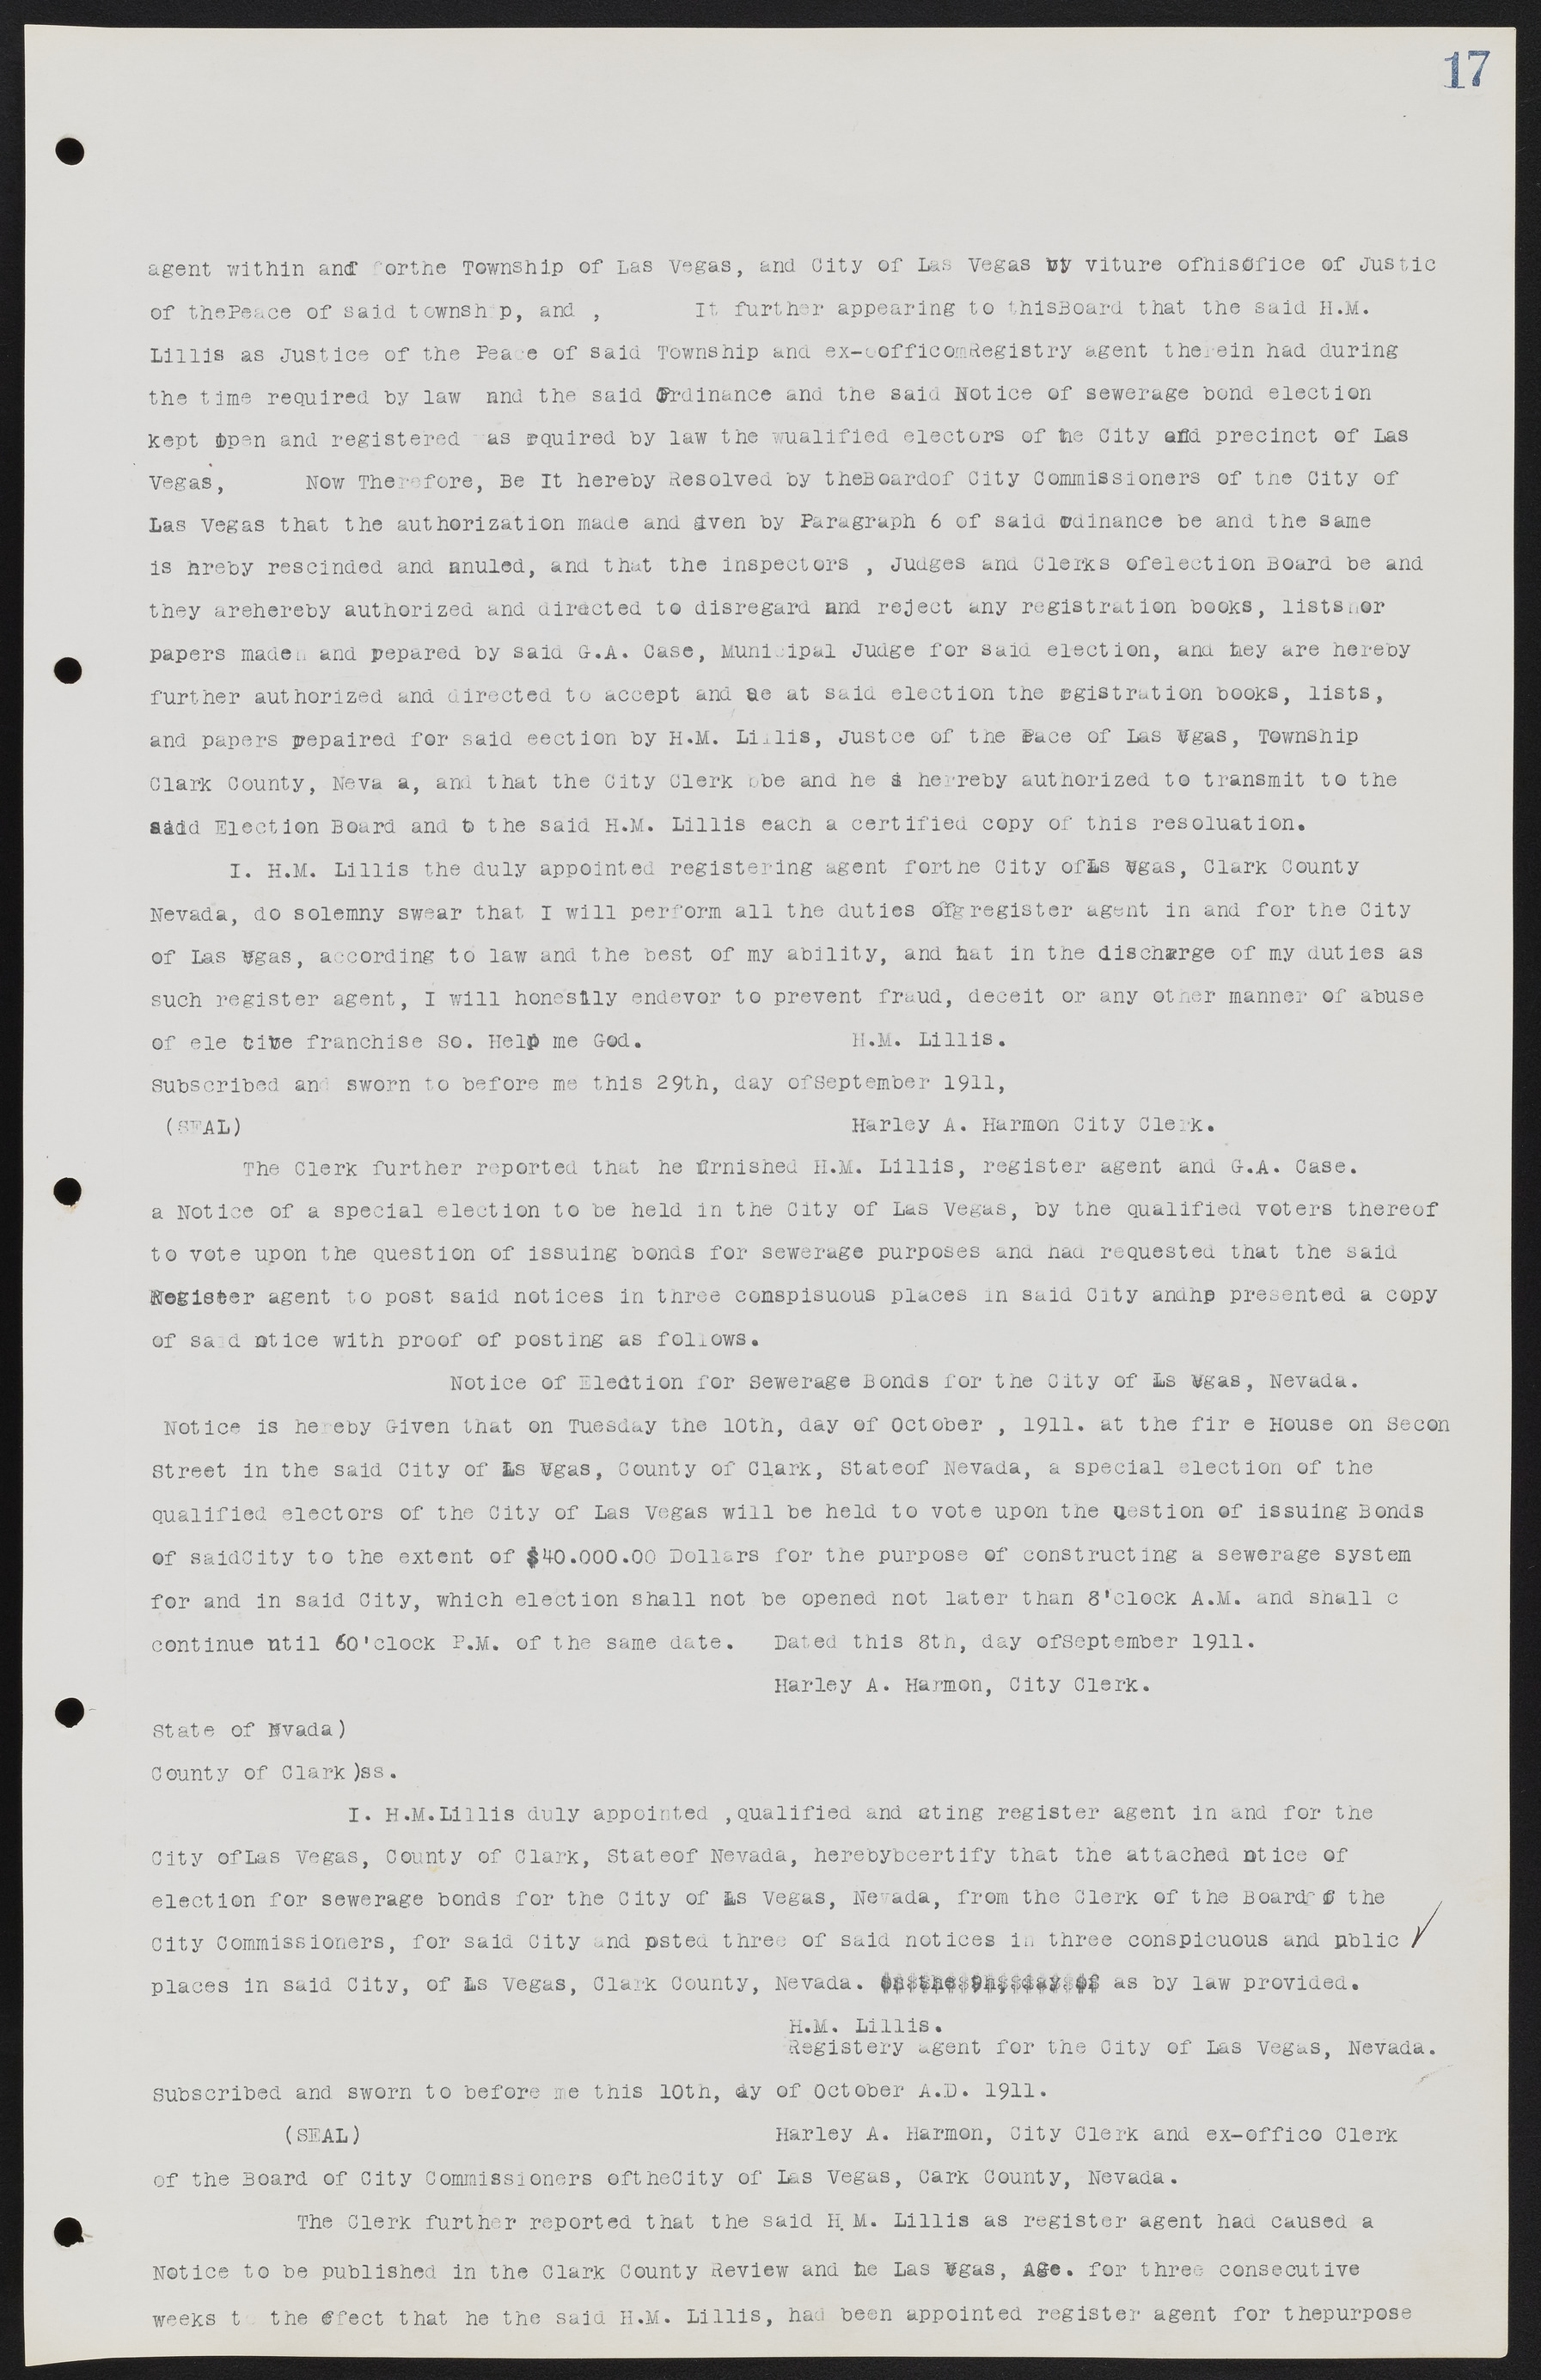 Las Vegas City Commission Minutes, June 22, 1911 to February 7, 1922, lvc000001-31